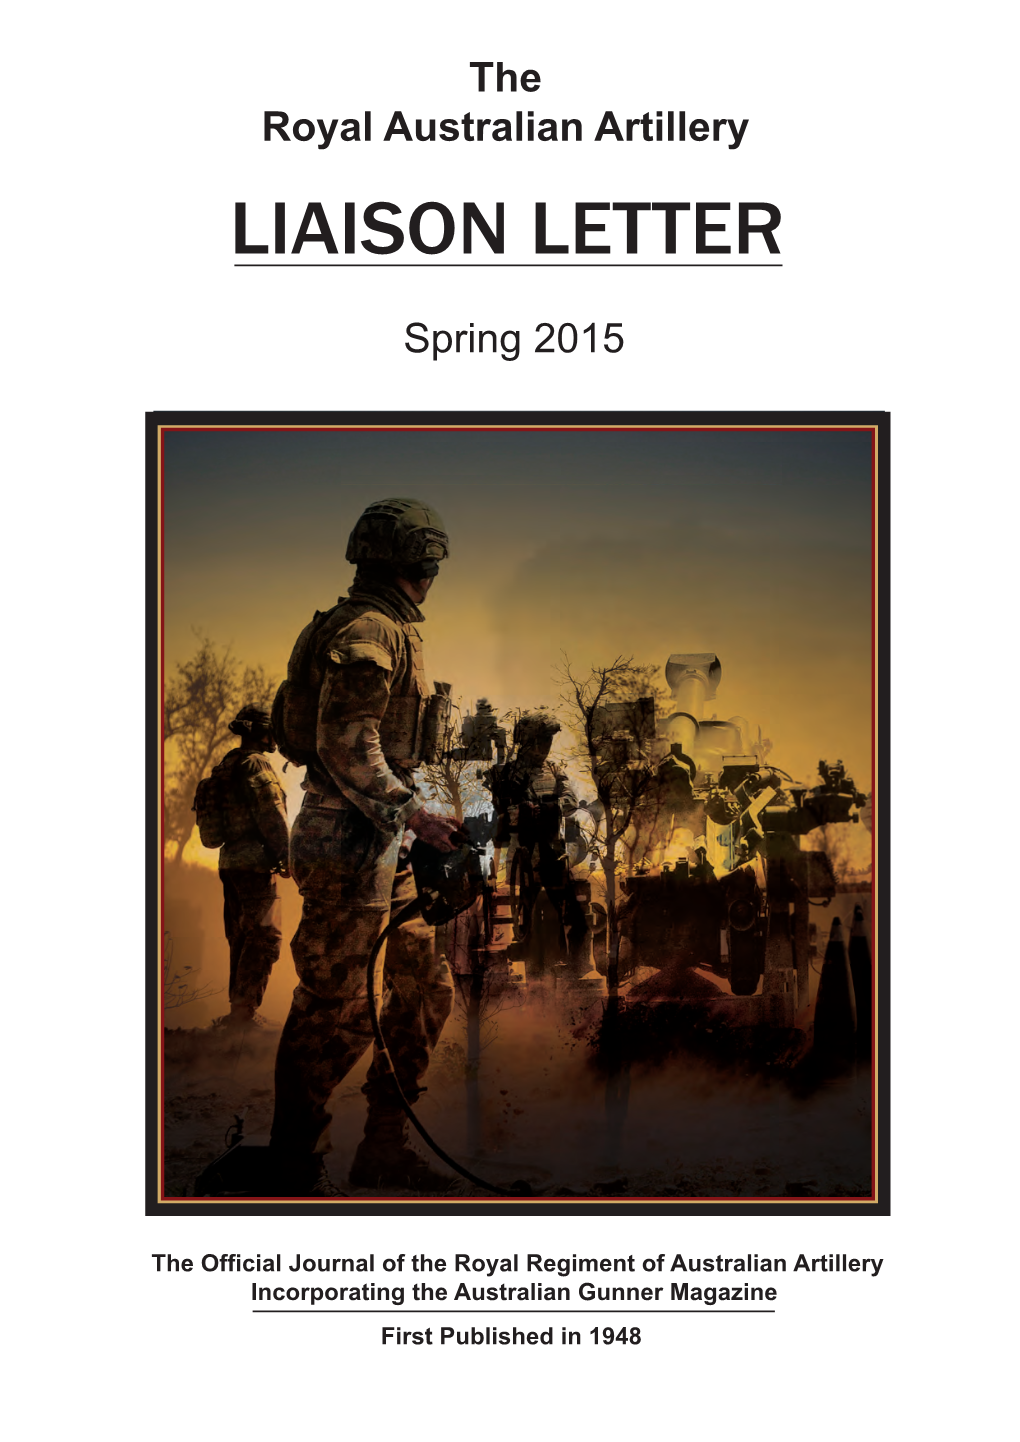 RAA Liaison Letter Spring 2015